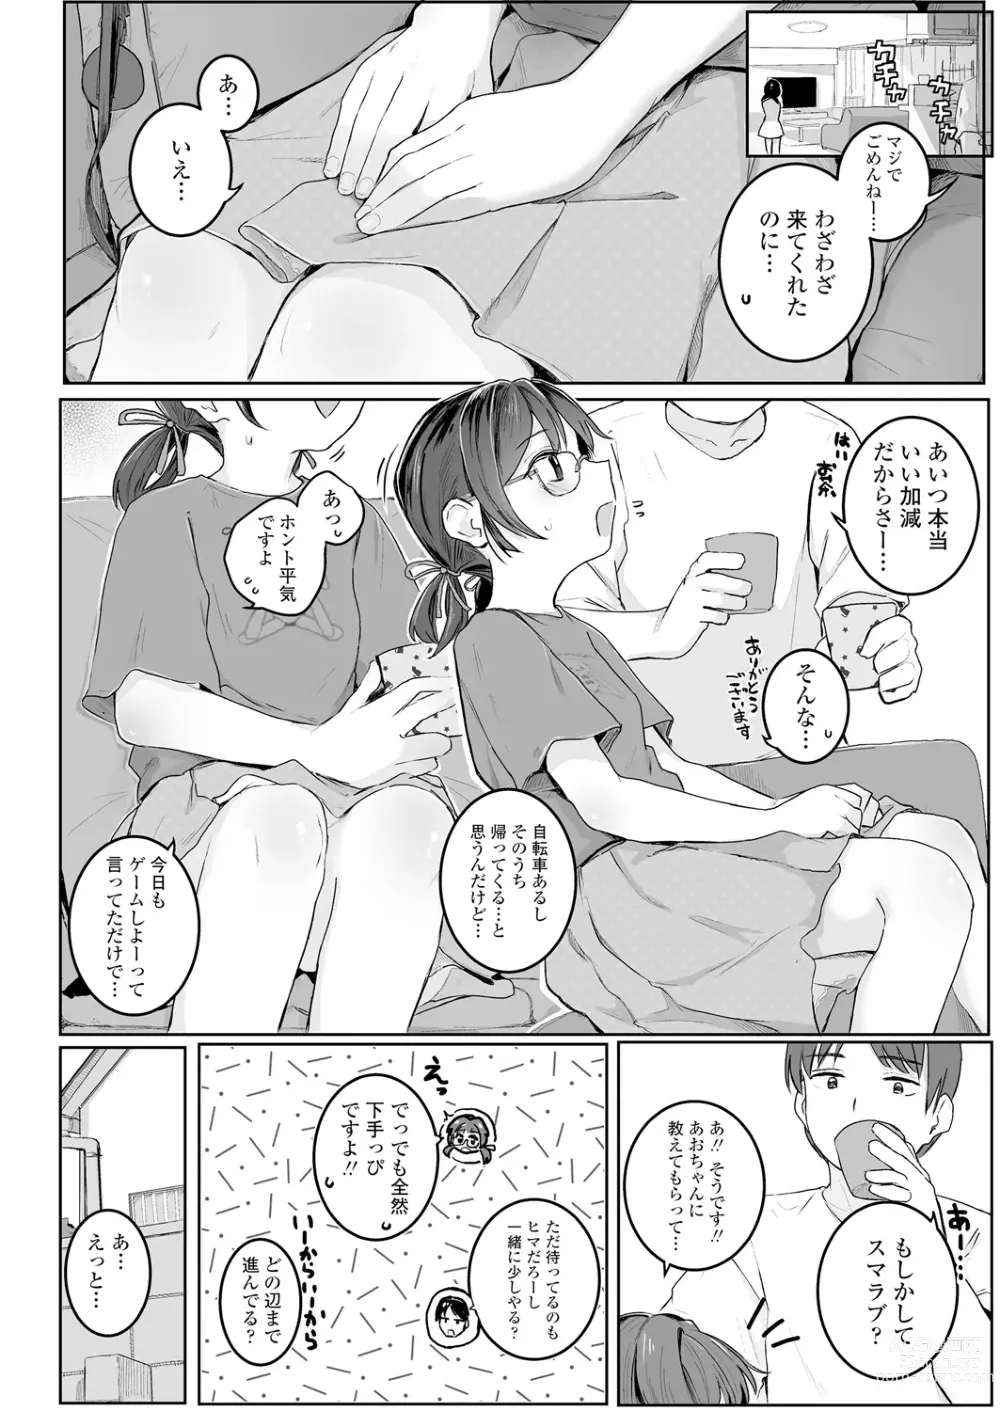 Page 2 of manga めぐみちゃんの気になるコト